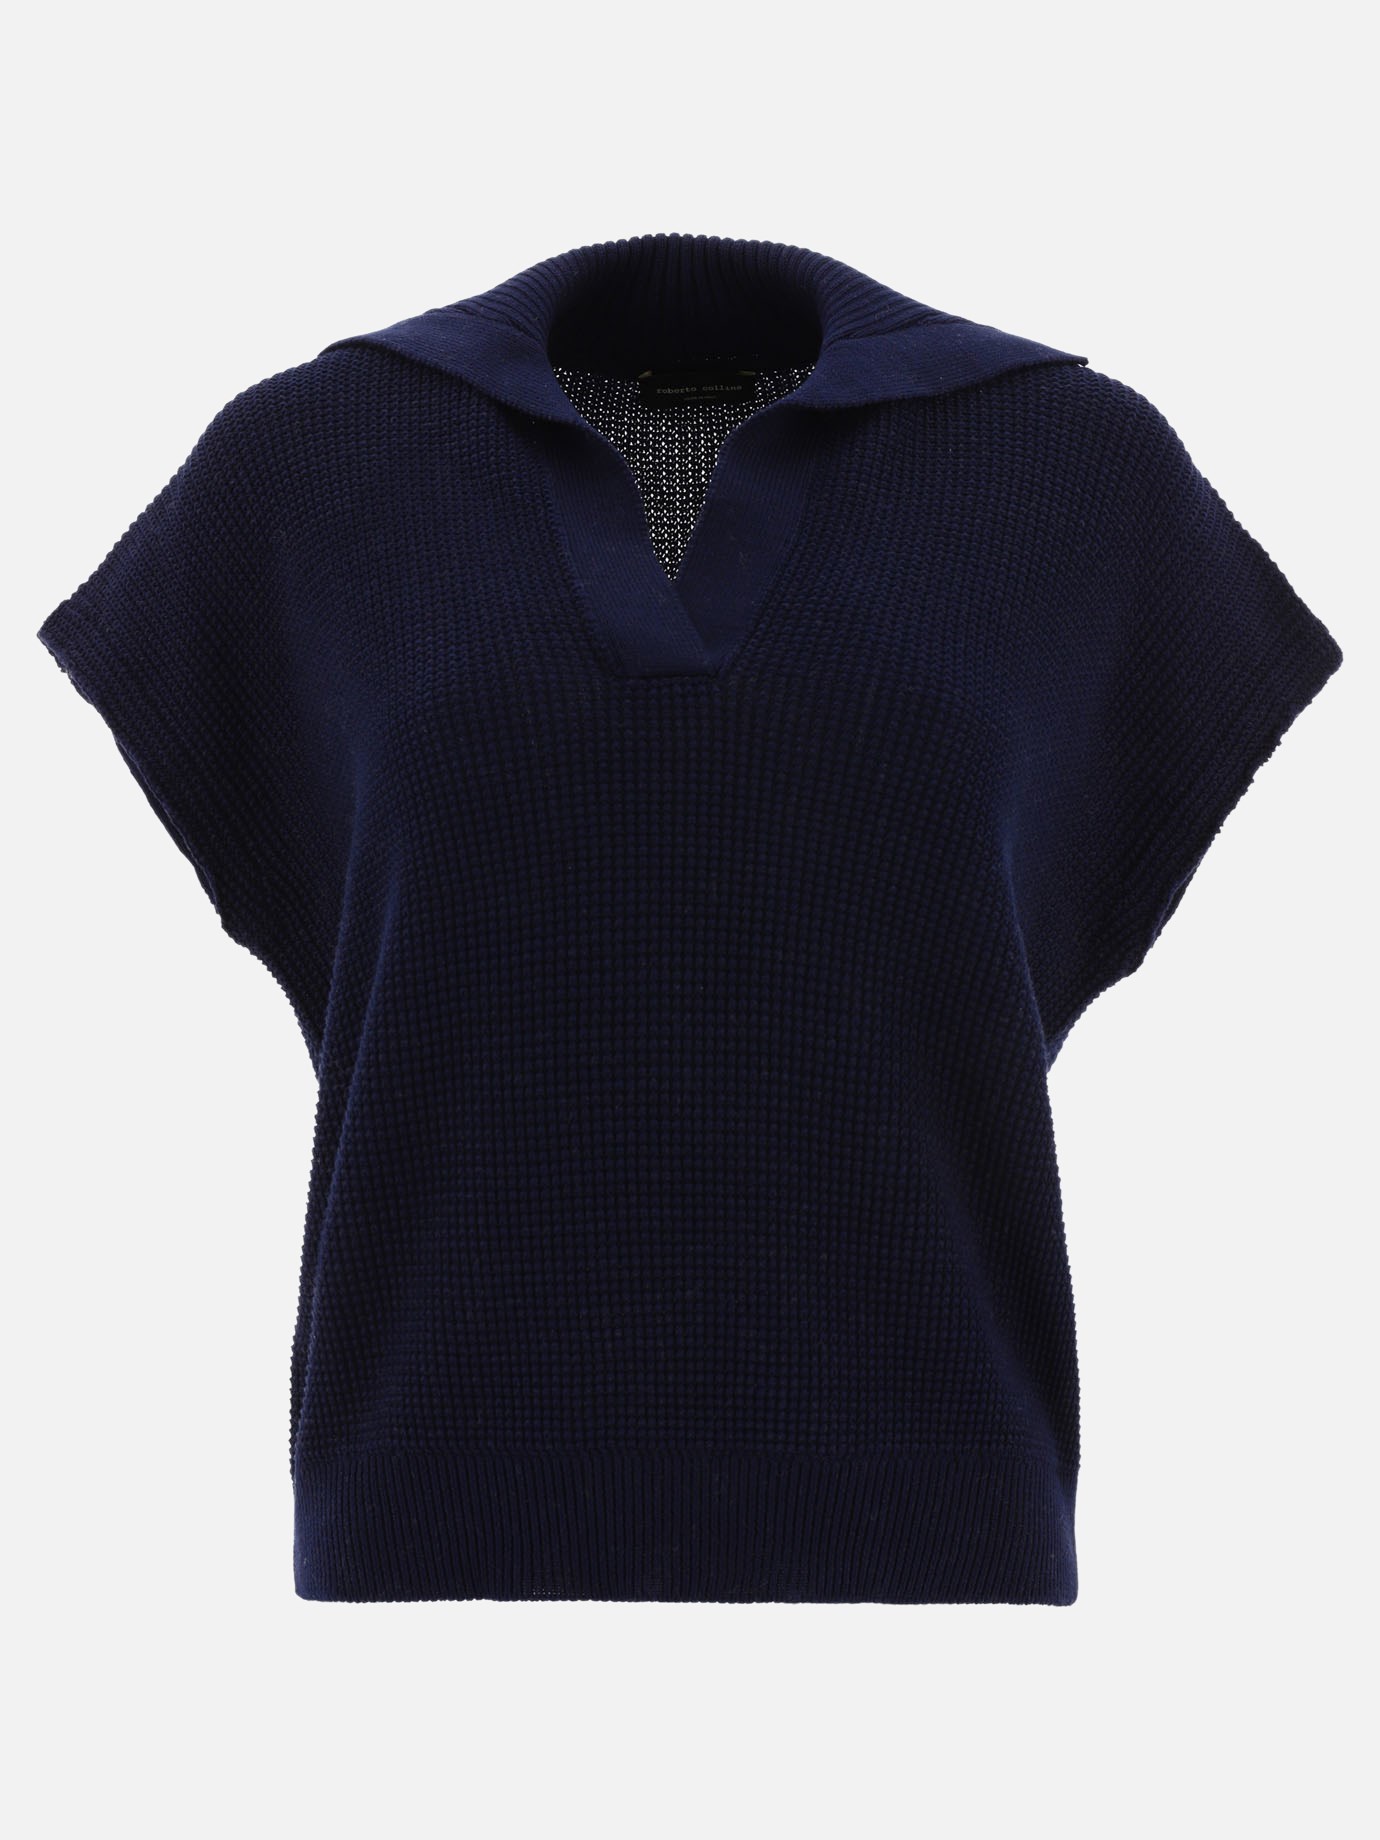 Sleeveless sweater with collar